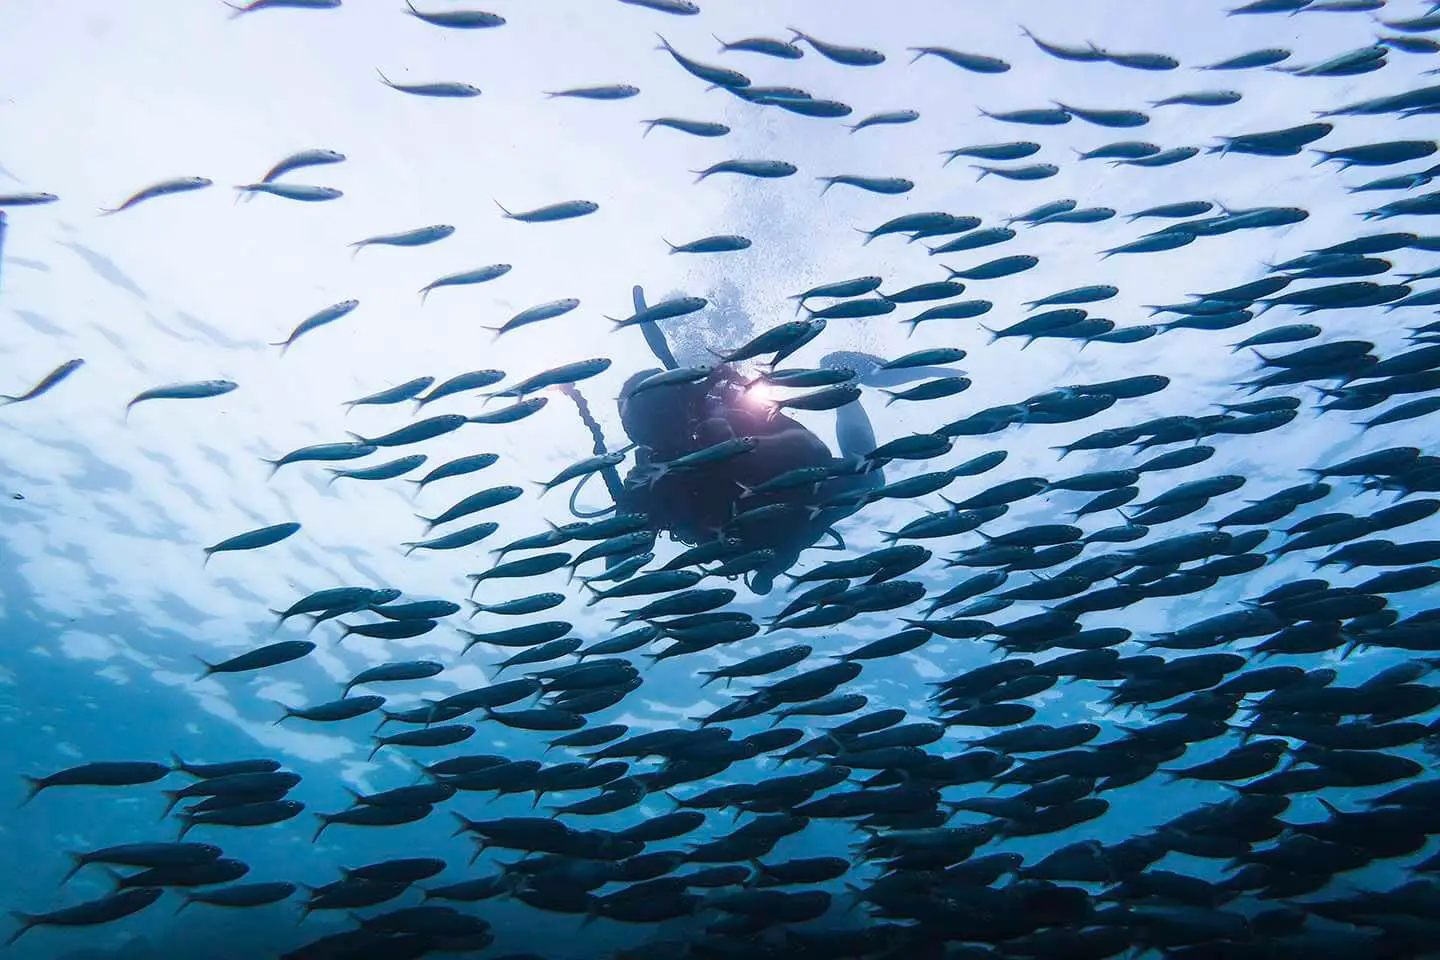 Scuba Diver and sardines